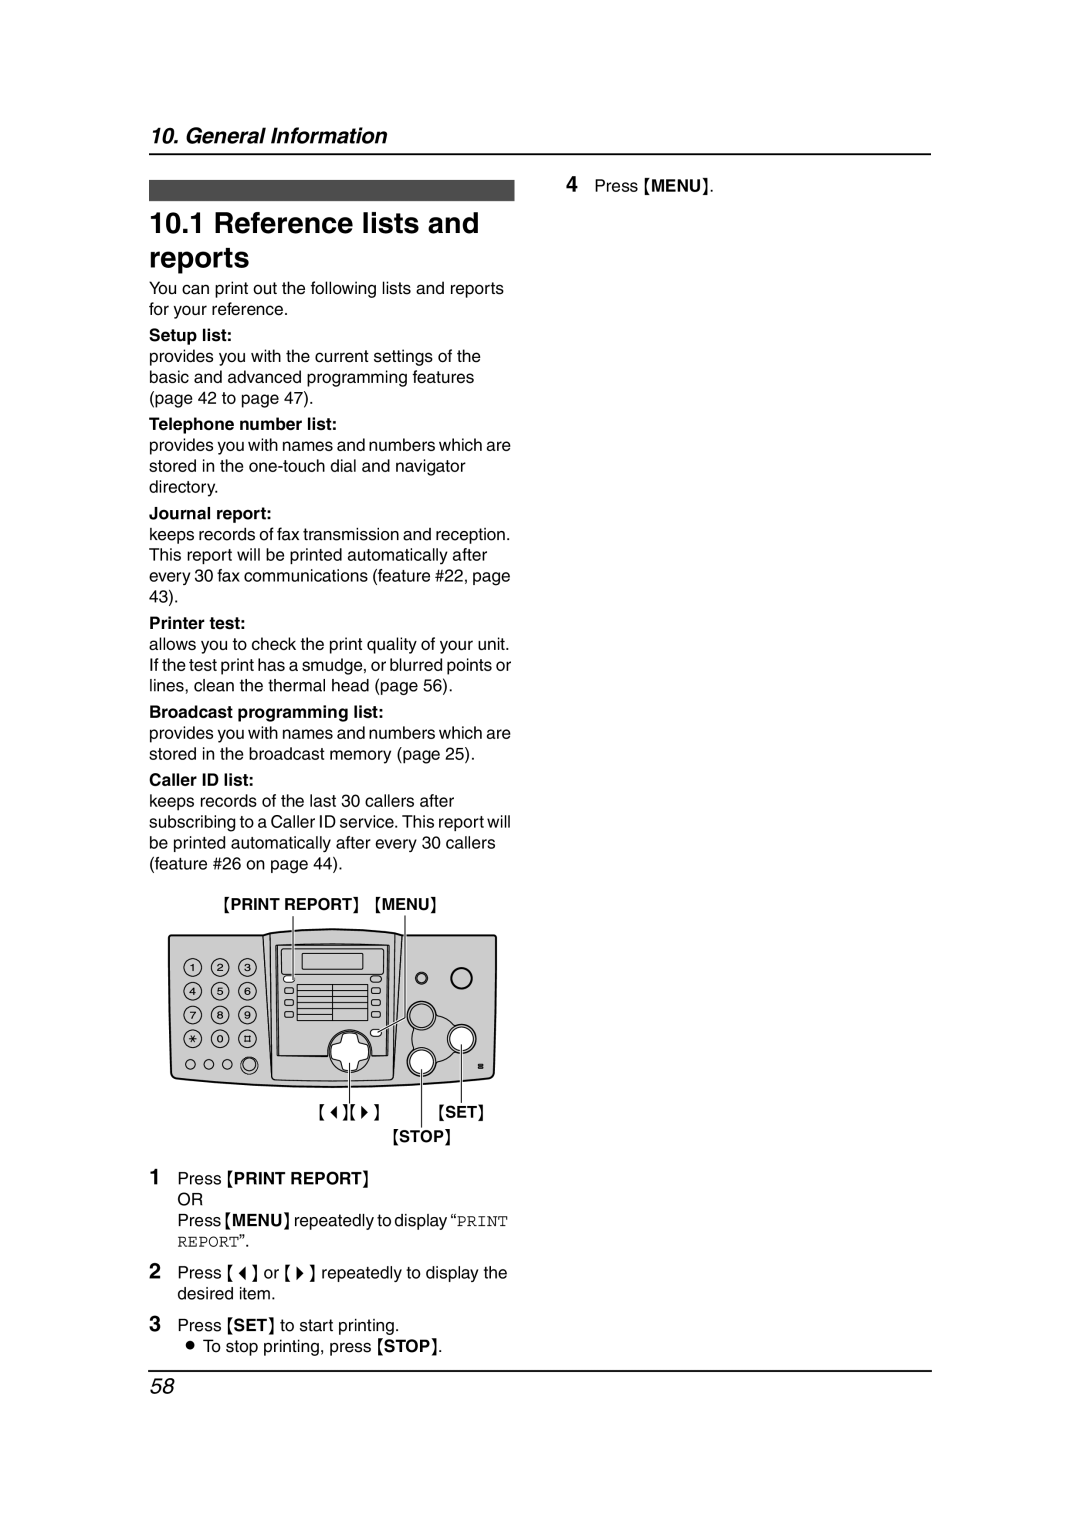 Panasonic KX-FP363HK, KX-FP343HK manual Reference lists and reports 